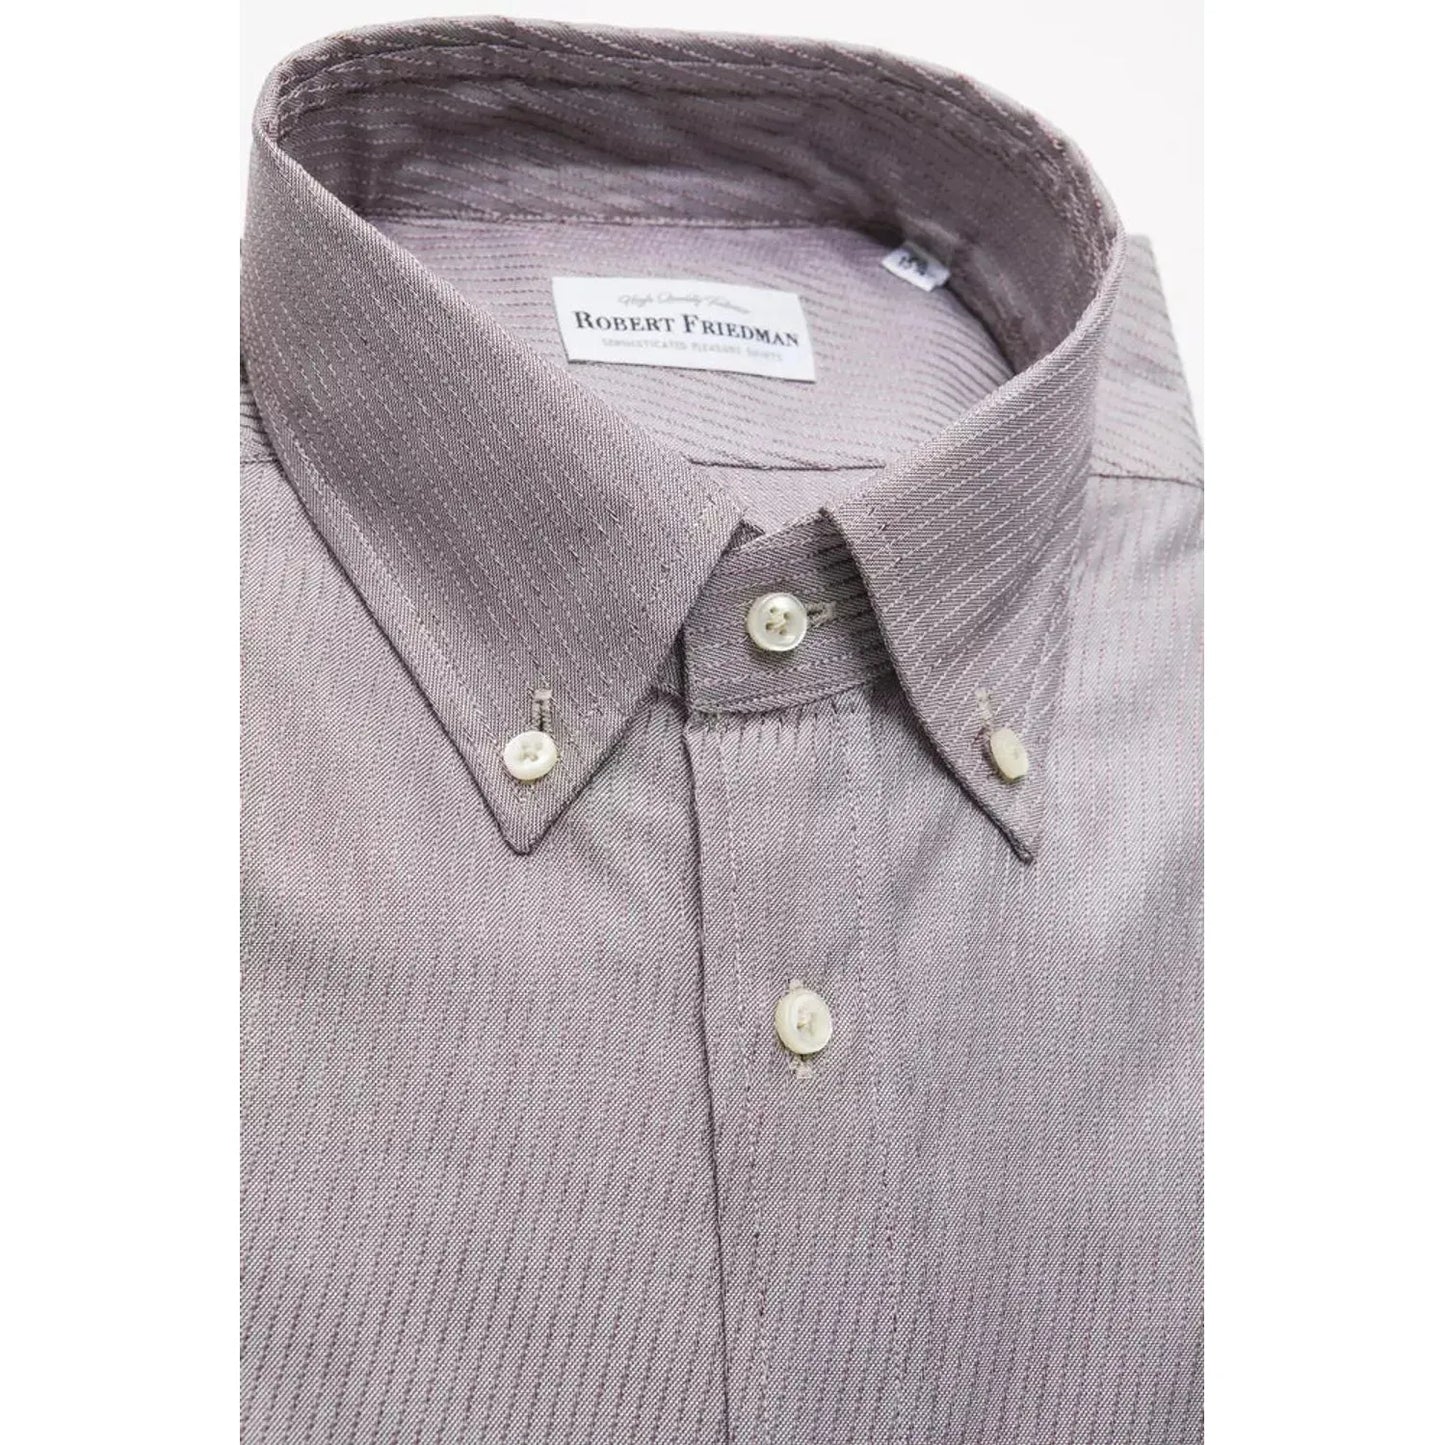 Robert Friedman Beige Cotton Button Down Men's Shirt beige-cotton-shirt-6 stock_product_image_20453_521599152-17-210350c9-33a.webp